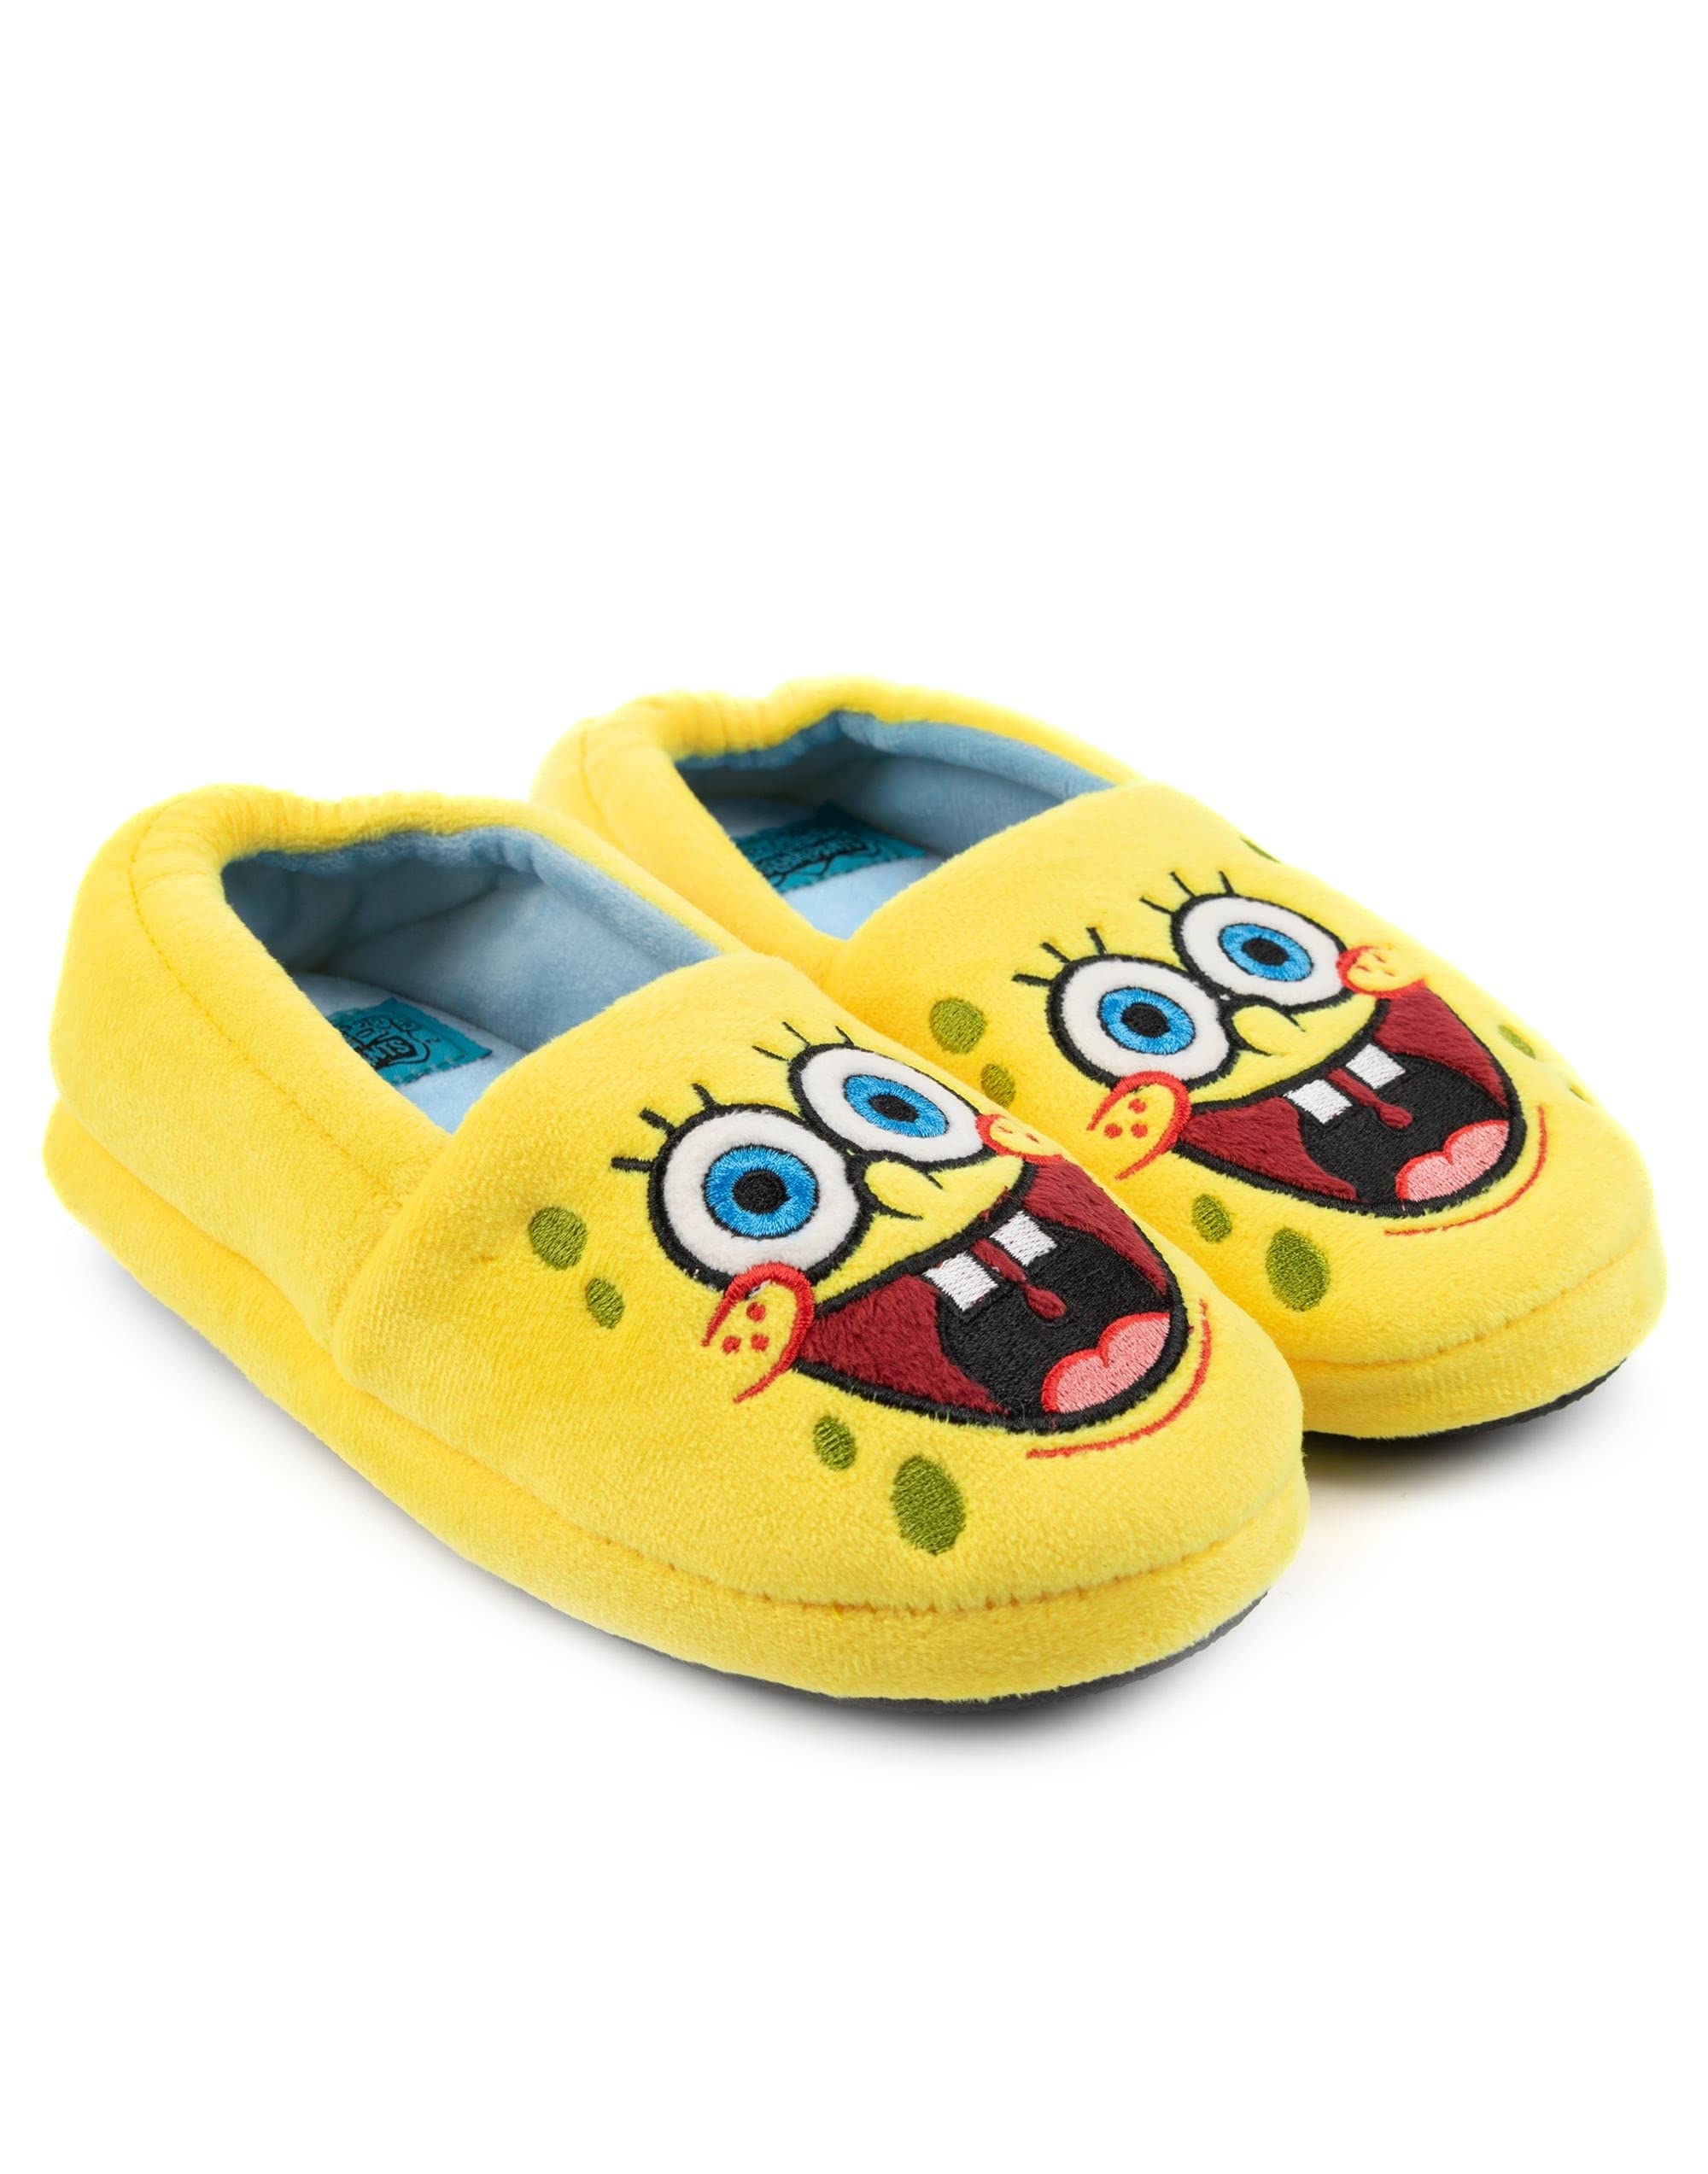 SpongeBob SquarePants Kids Slippers | Boys Girls Animated Character Yellow Blue Elasticated Heel Support House Sliders